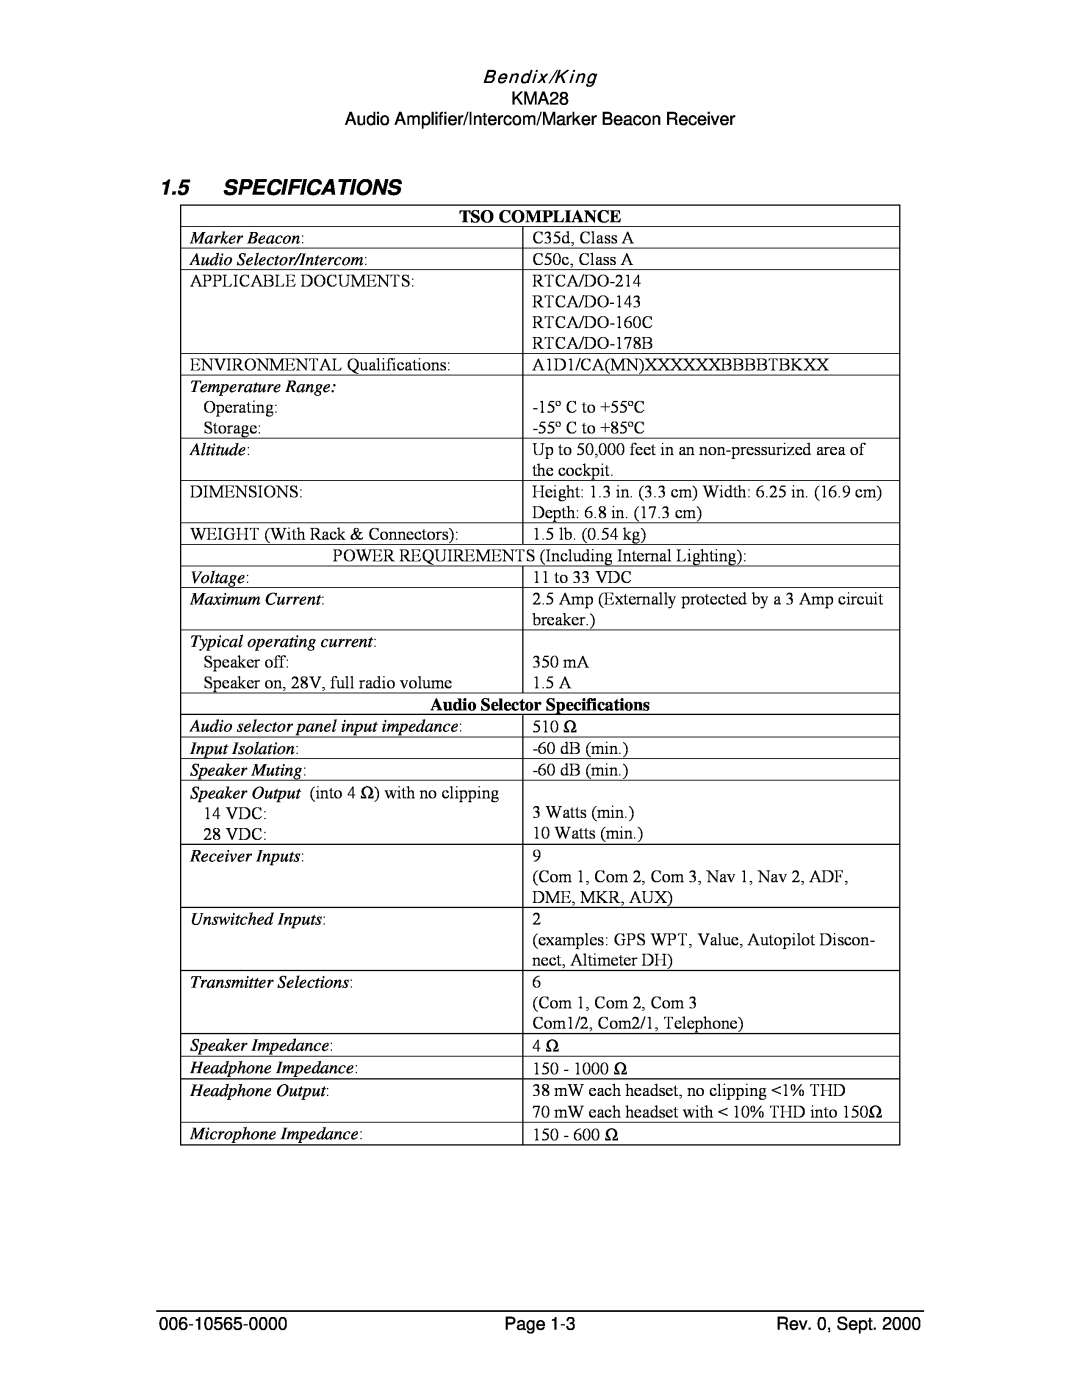 Honeywell KMA28 operation manual Bendix/King, Tso Compliance, Audio Selector Specifications 